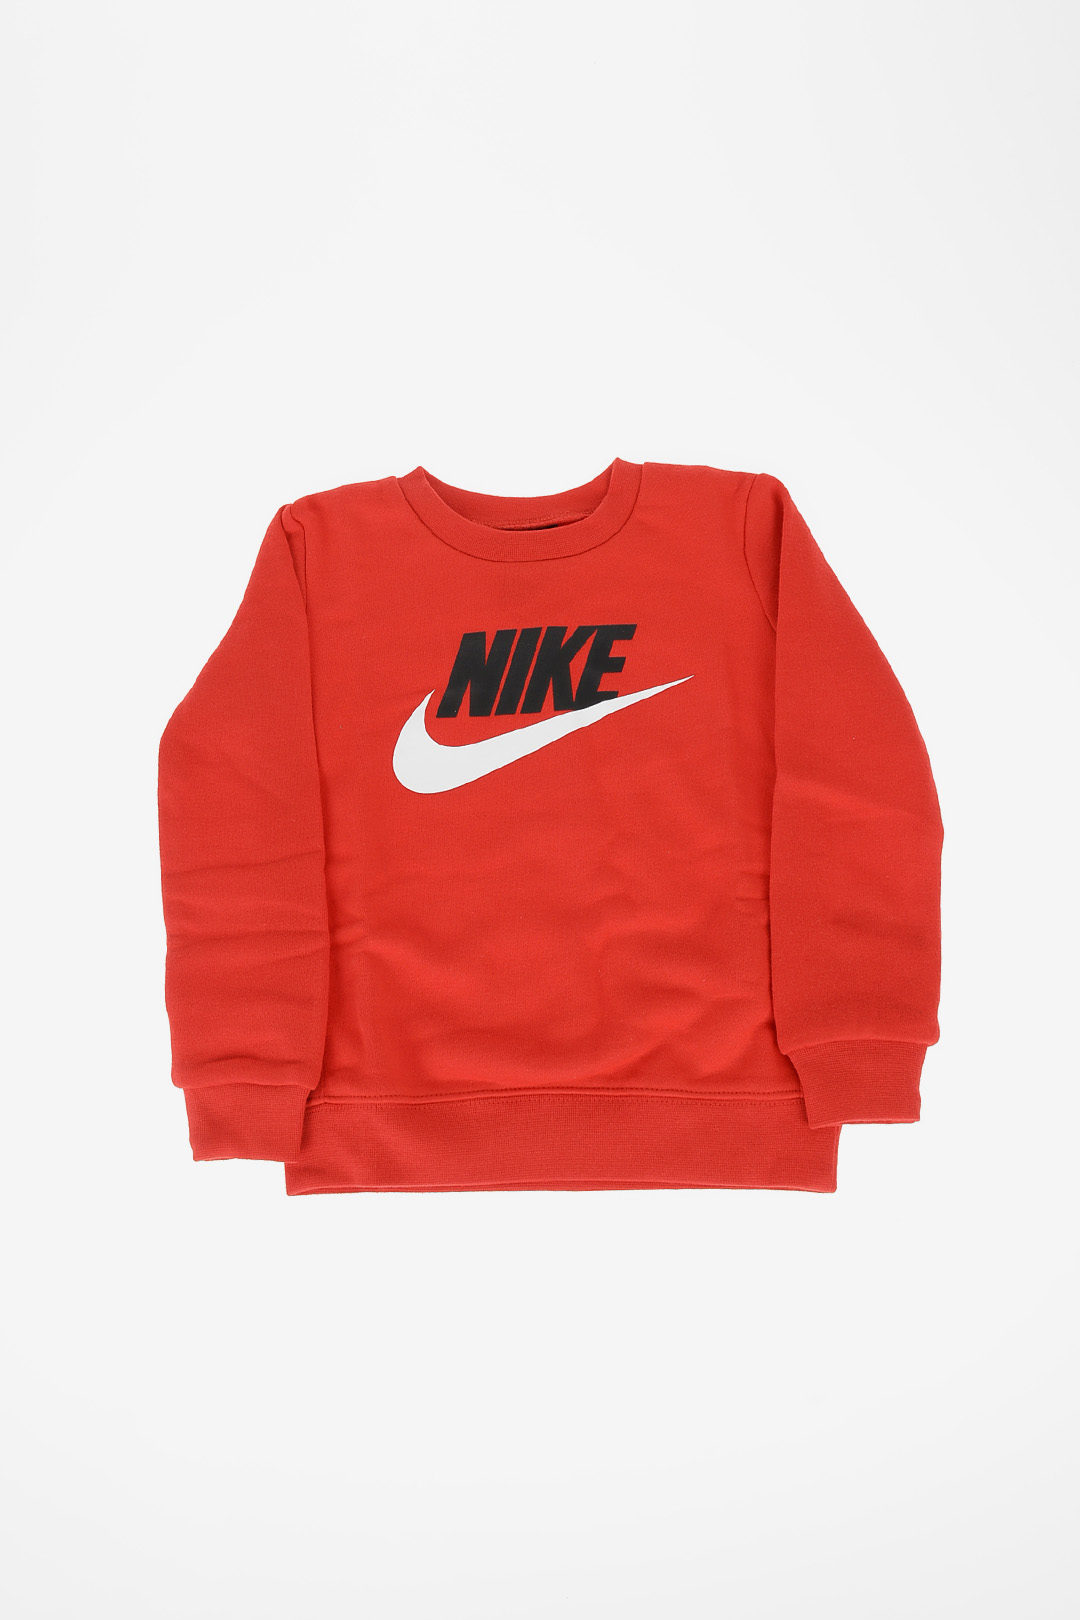 Nike KIDS Printed Crewneck Sweatshirt 